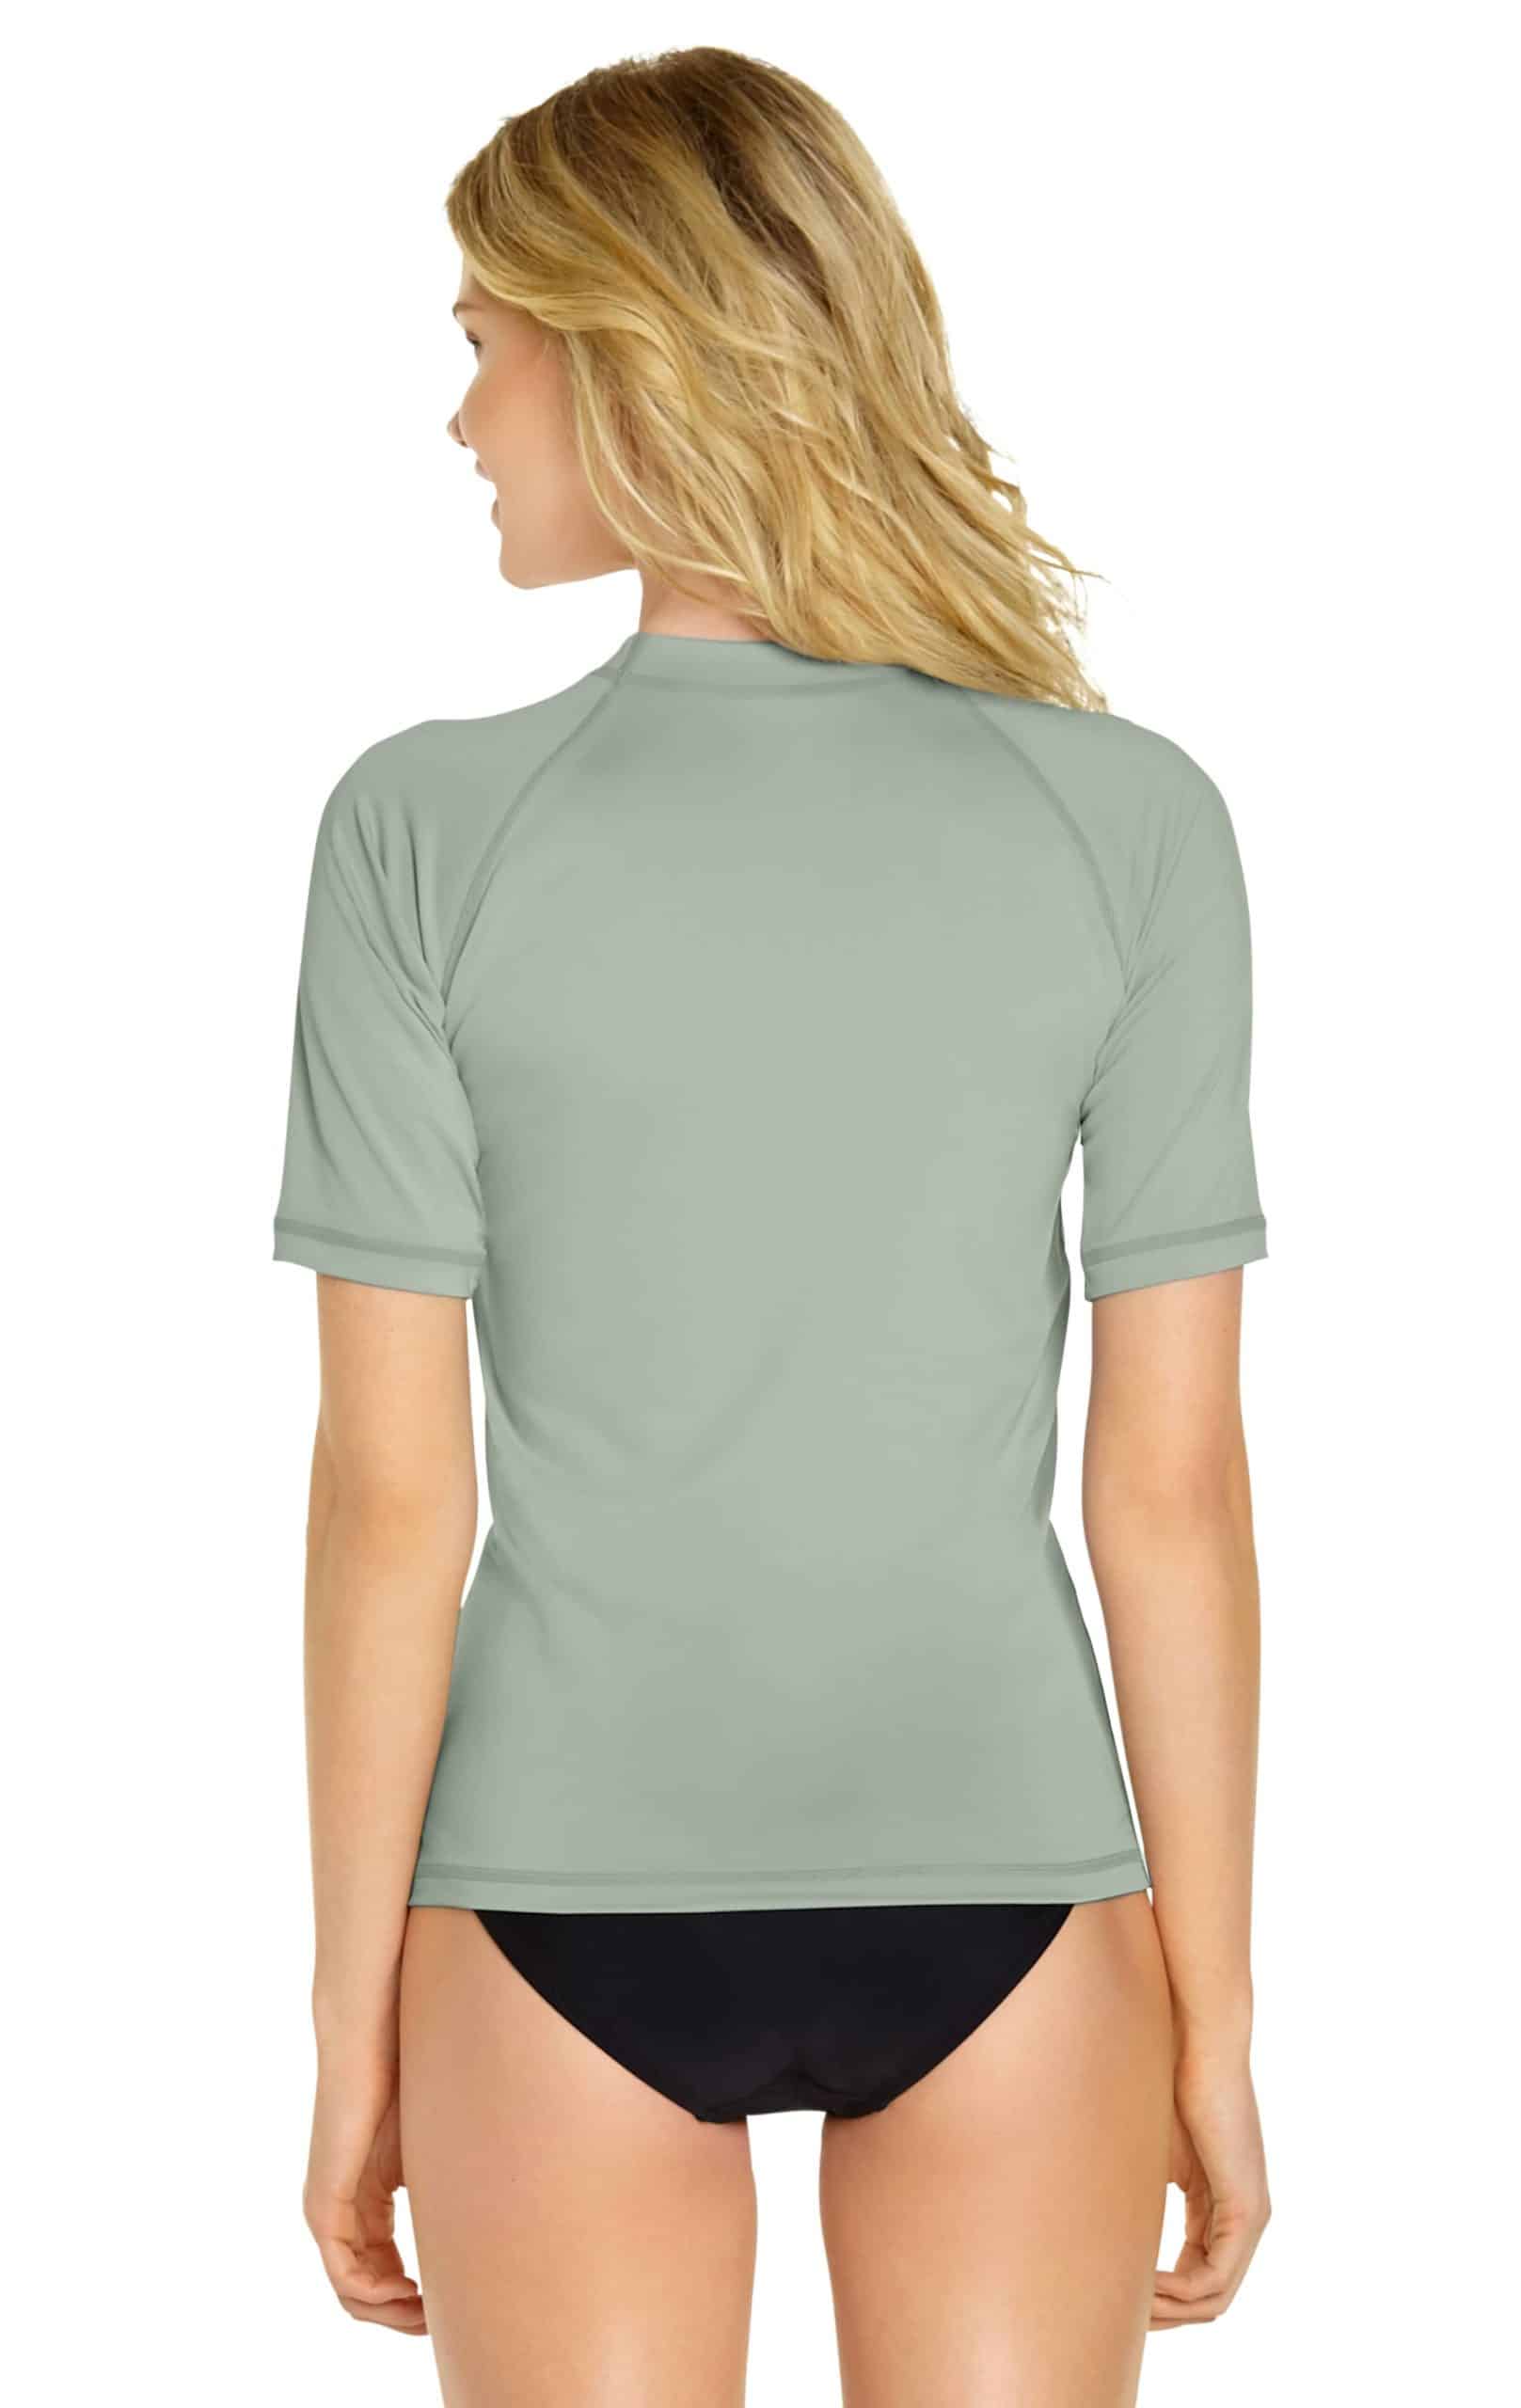 Women's Short Sleeve Rash Guard - Silver - Wet Effect, Inc.